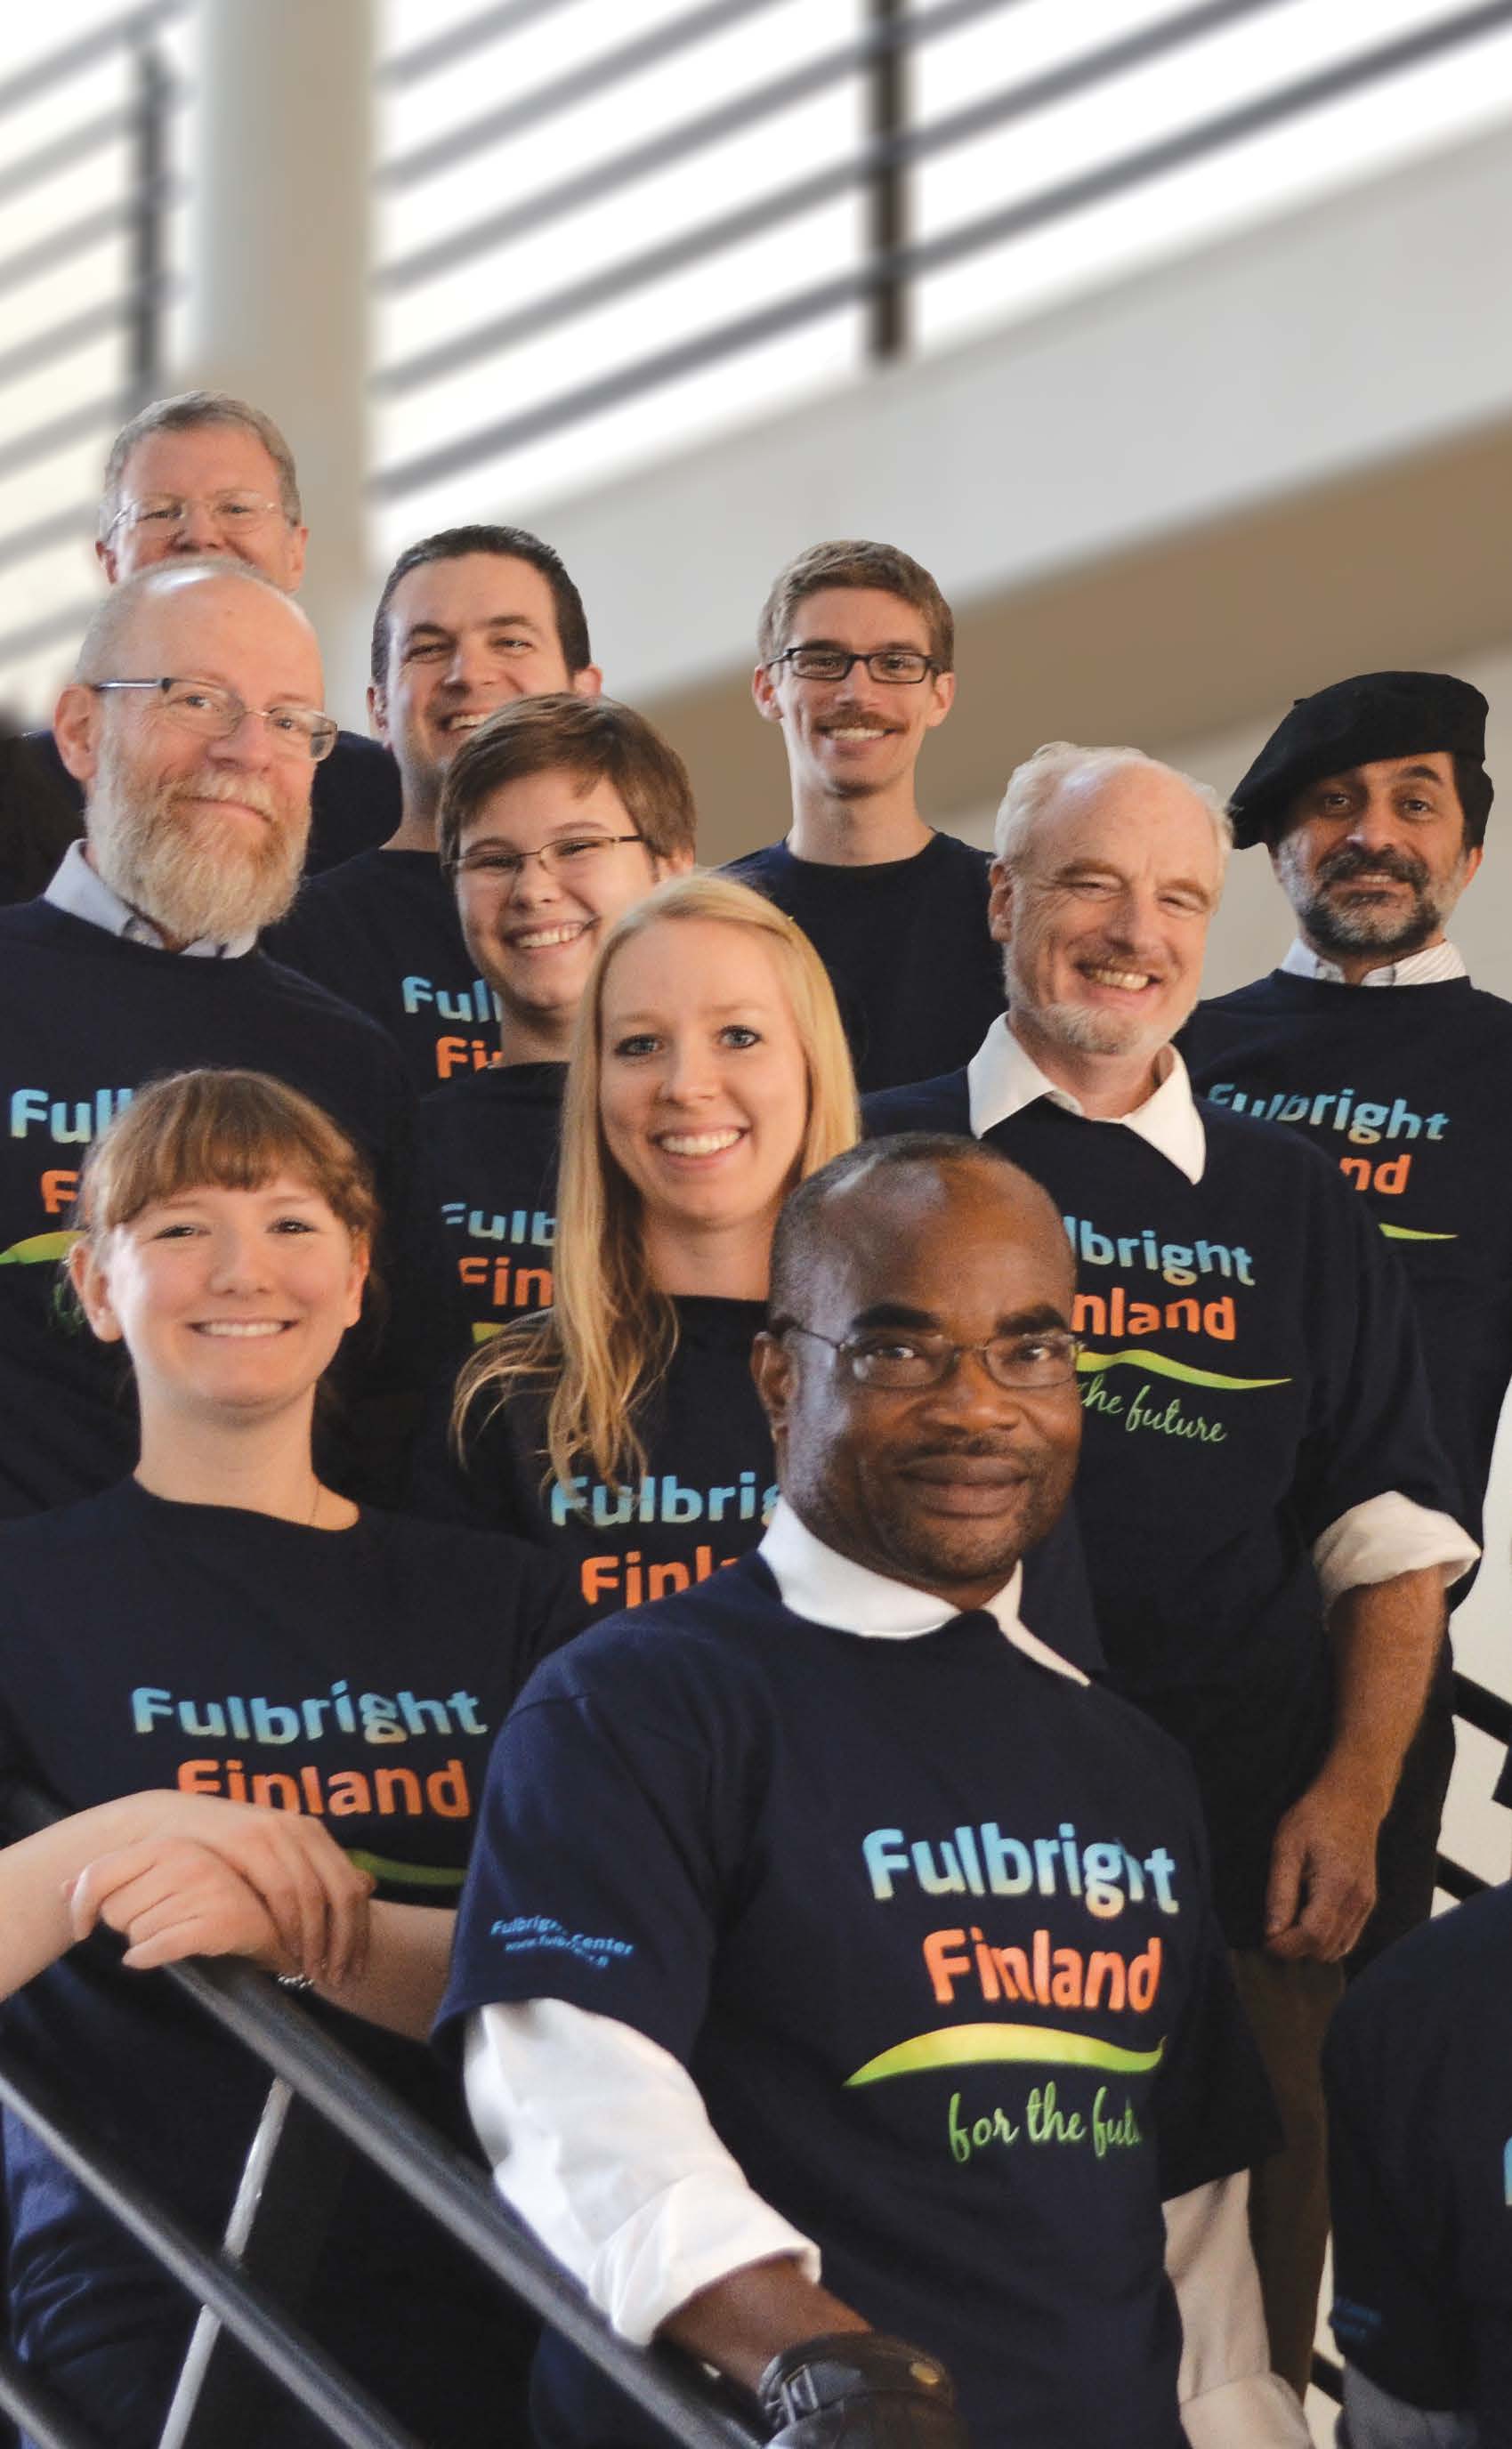 Fulbright-Finland for the Future Miten Fulbright-stipendiaatit valitaan